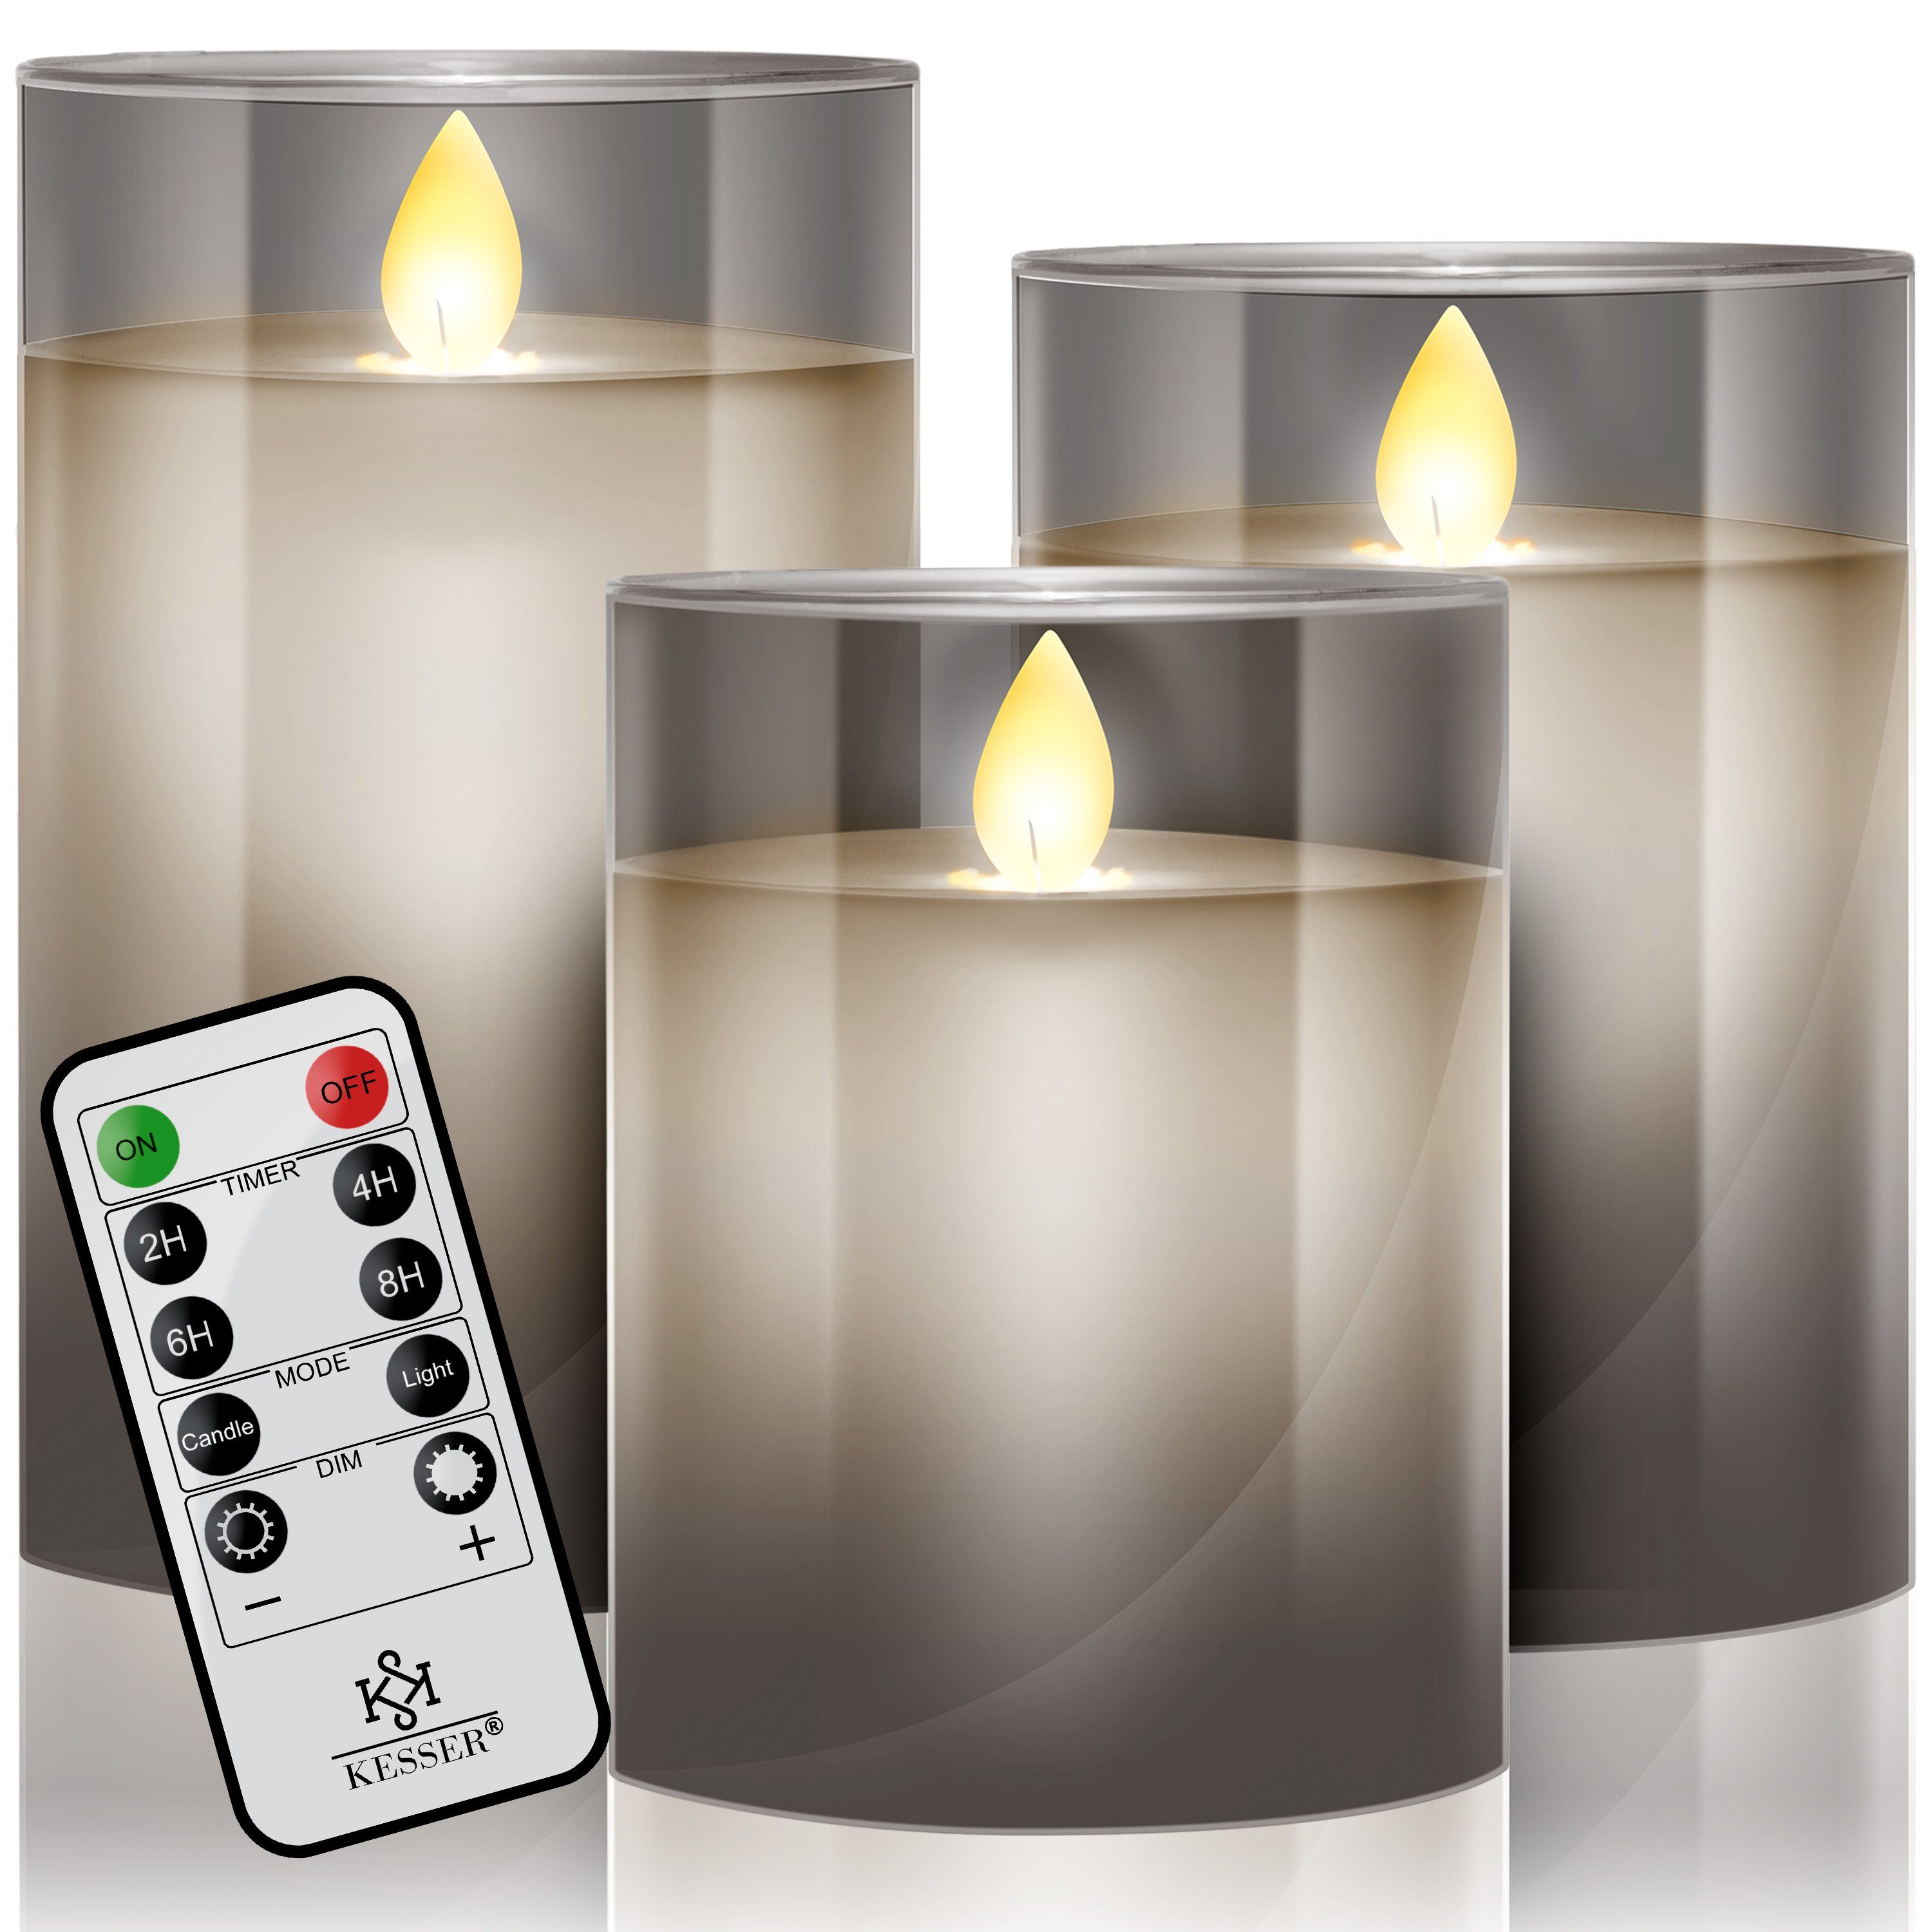 KESSER LED-Kerze, LED Kerzen 3er Set Flammenlose Kerze mit Fernbedienung Timer